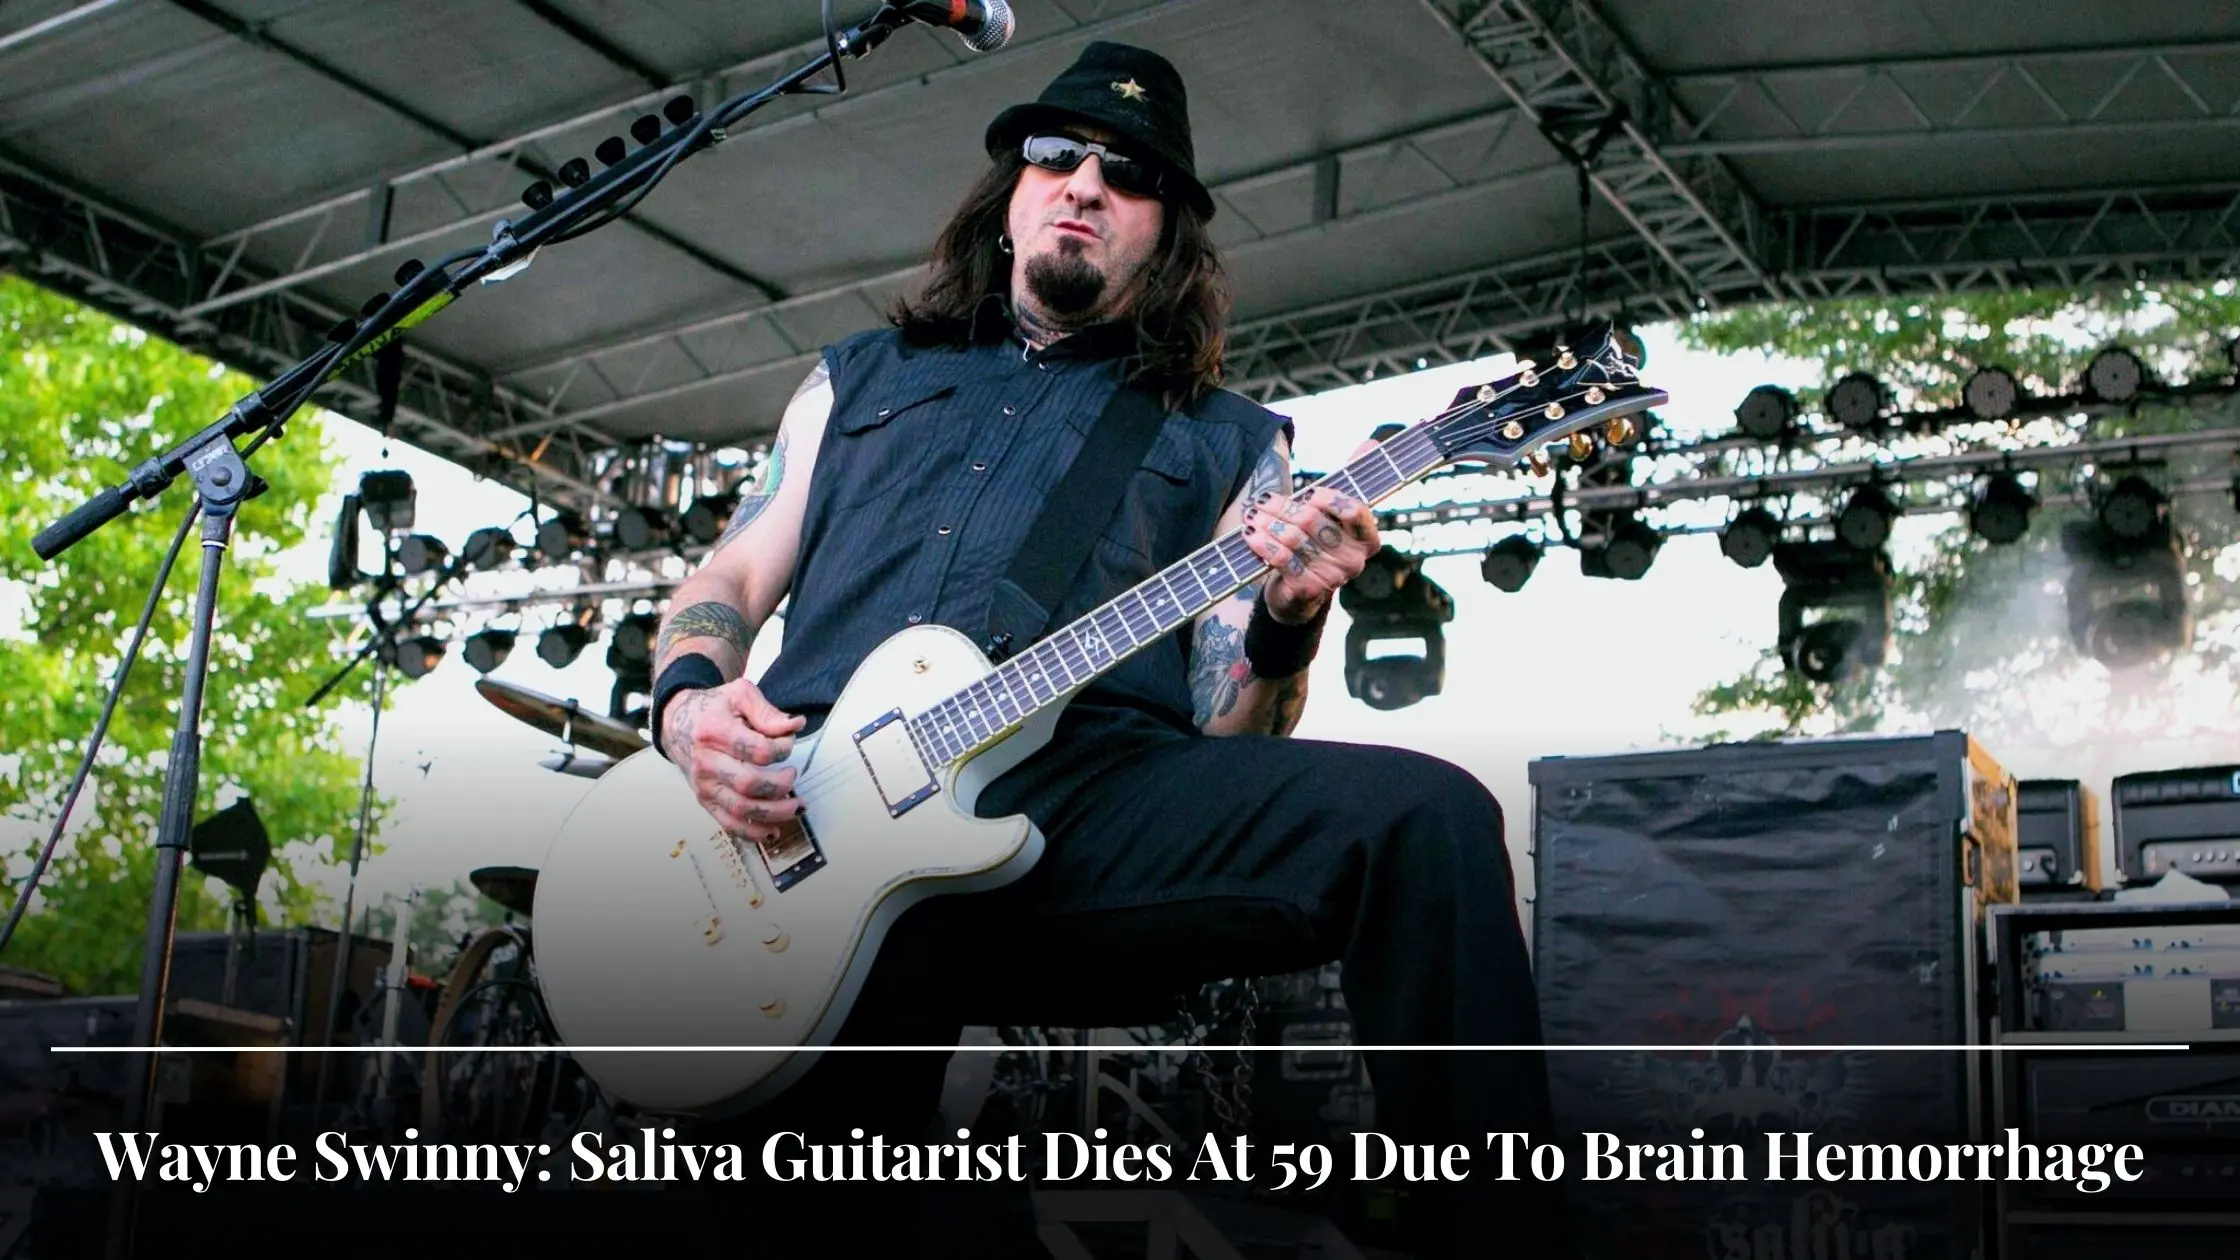 Wayne Swinny Saliva Guitarist Dies At 59 Due To Brain Hemorrhage